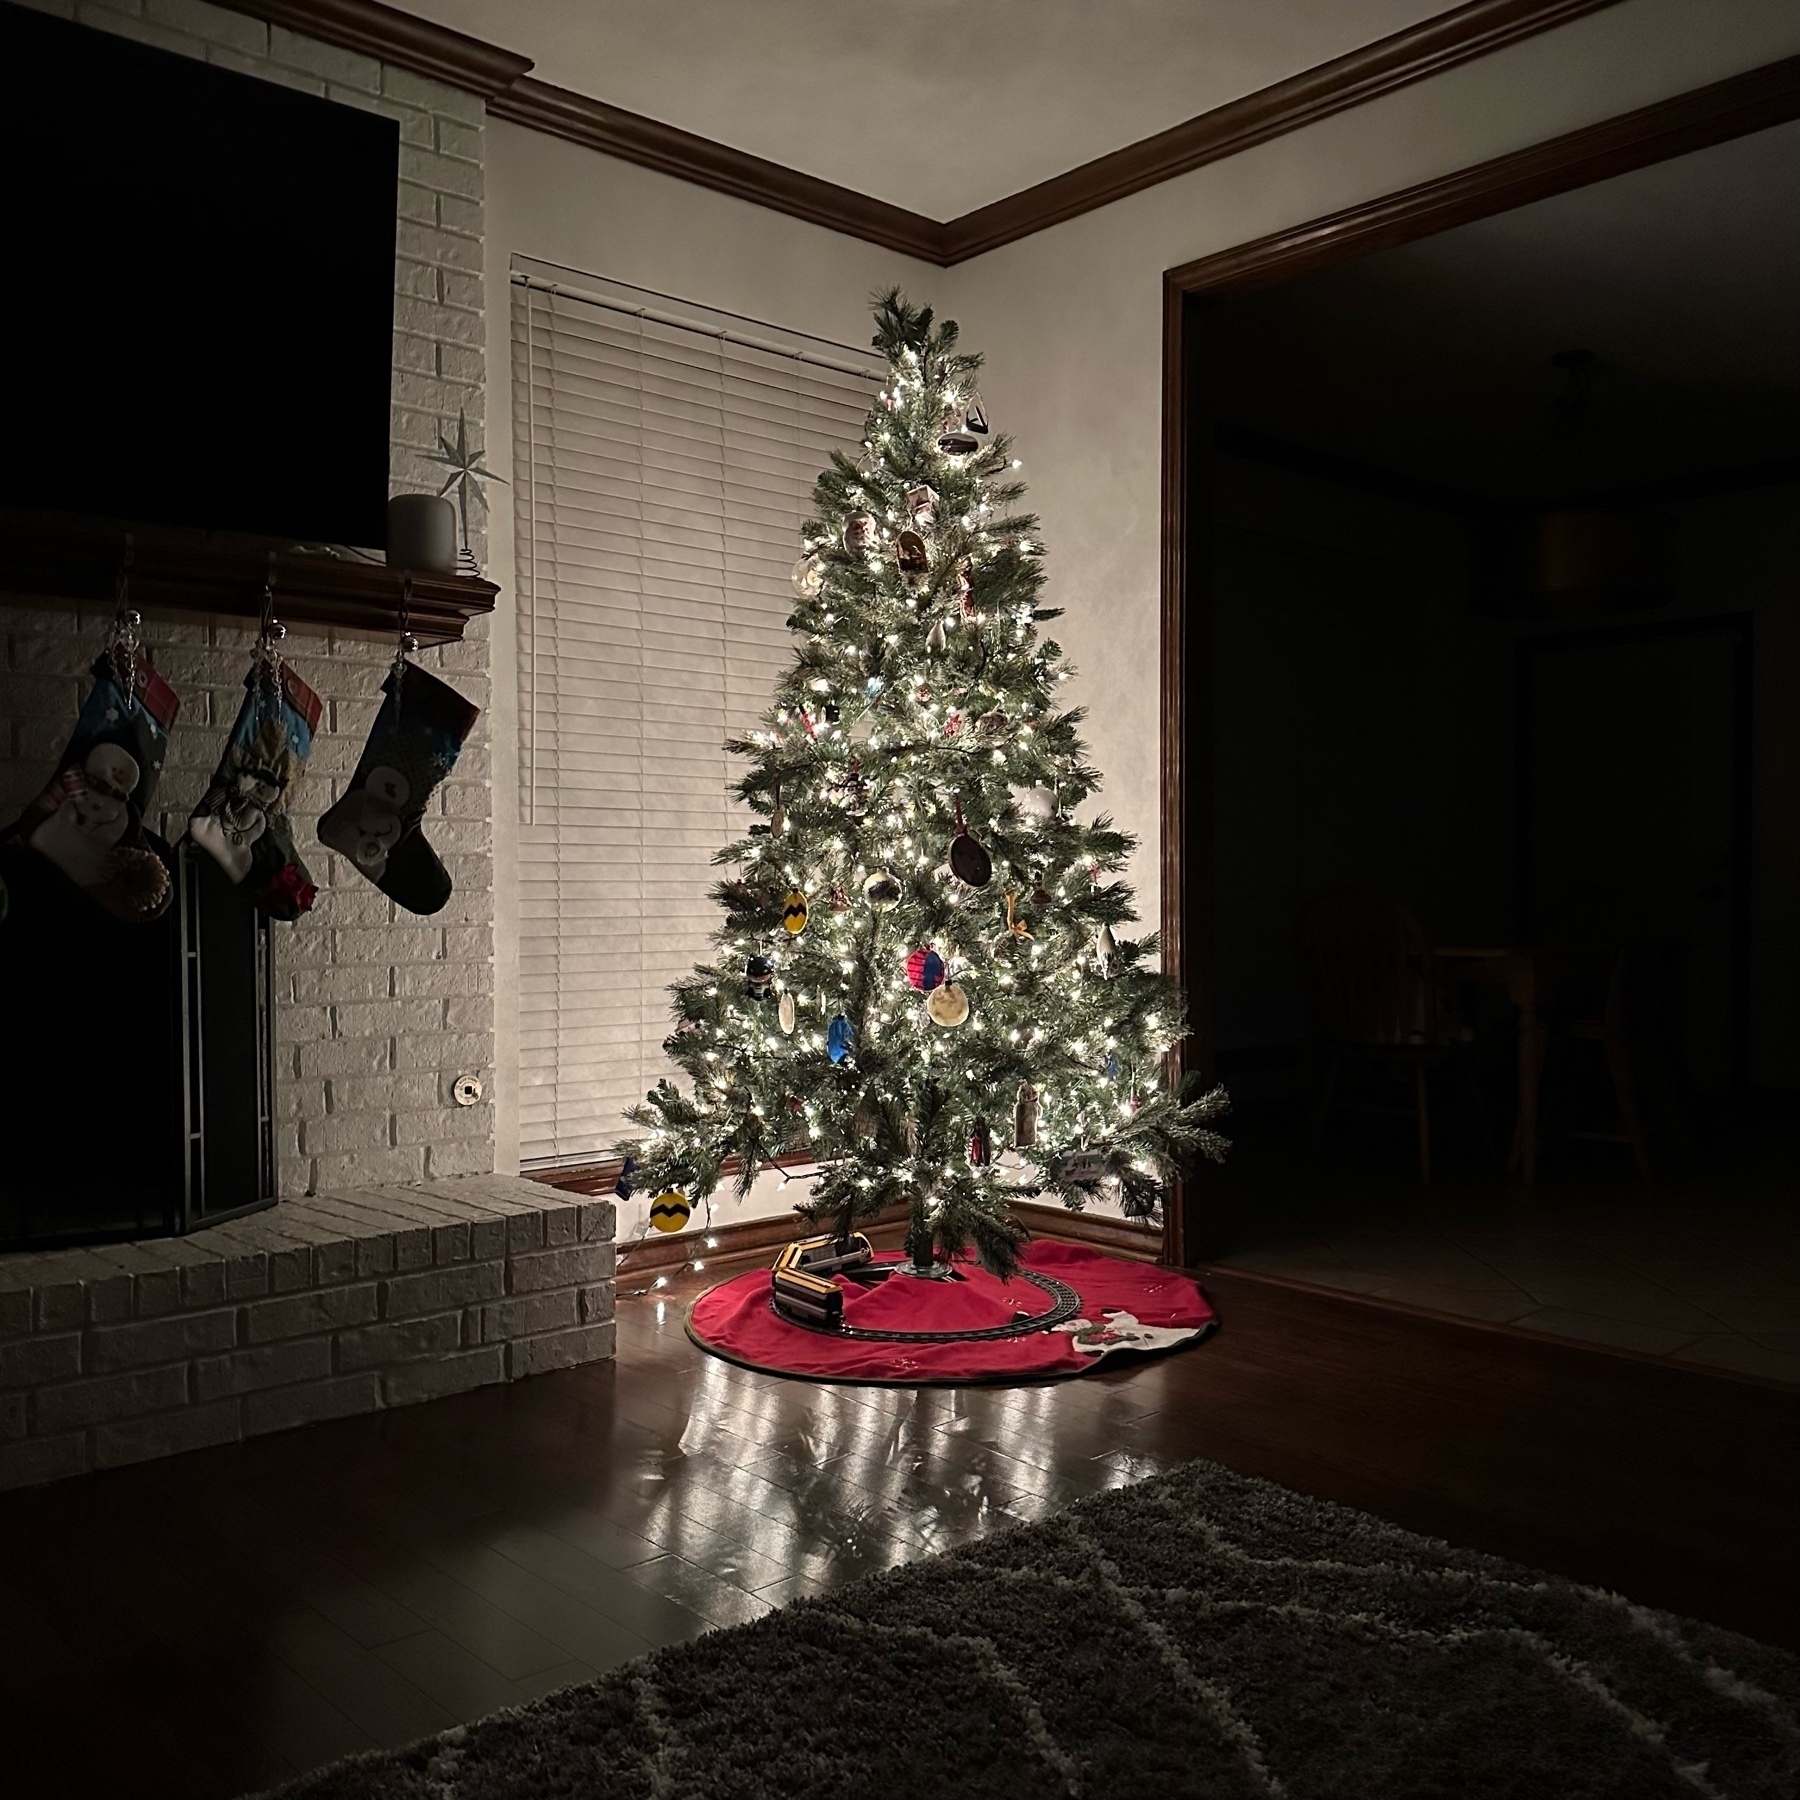 Lighted Christmas tree